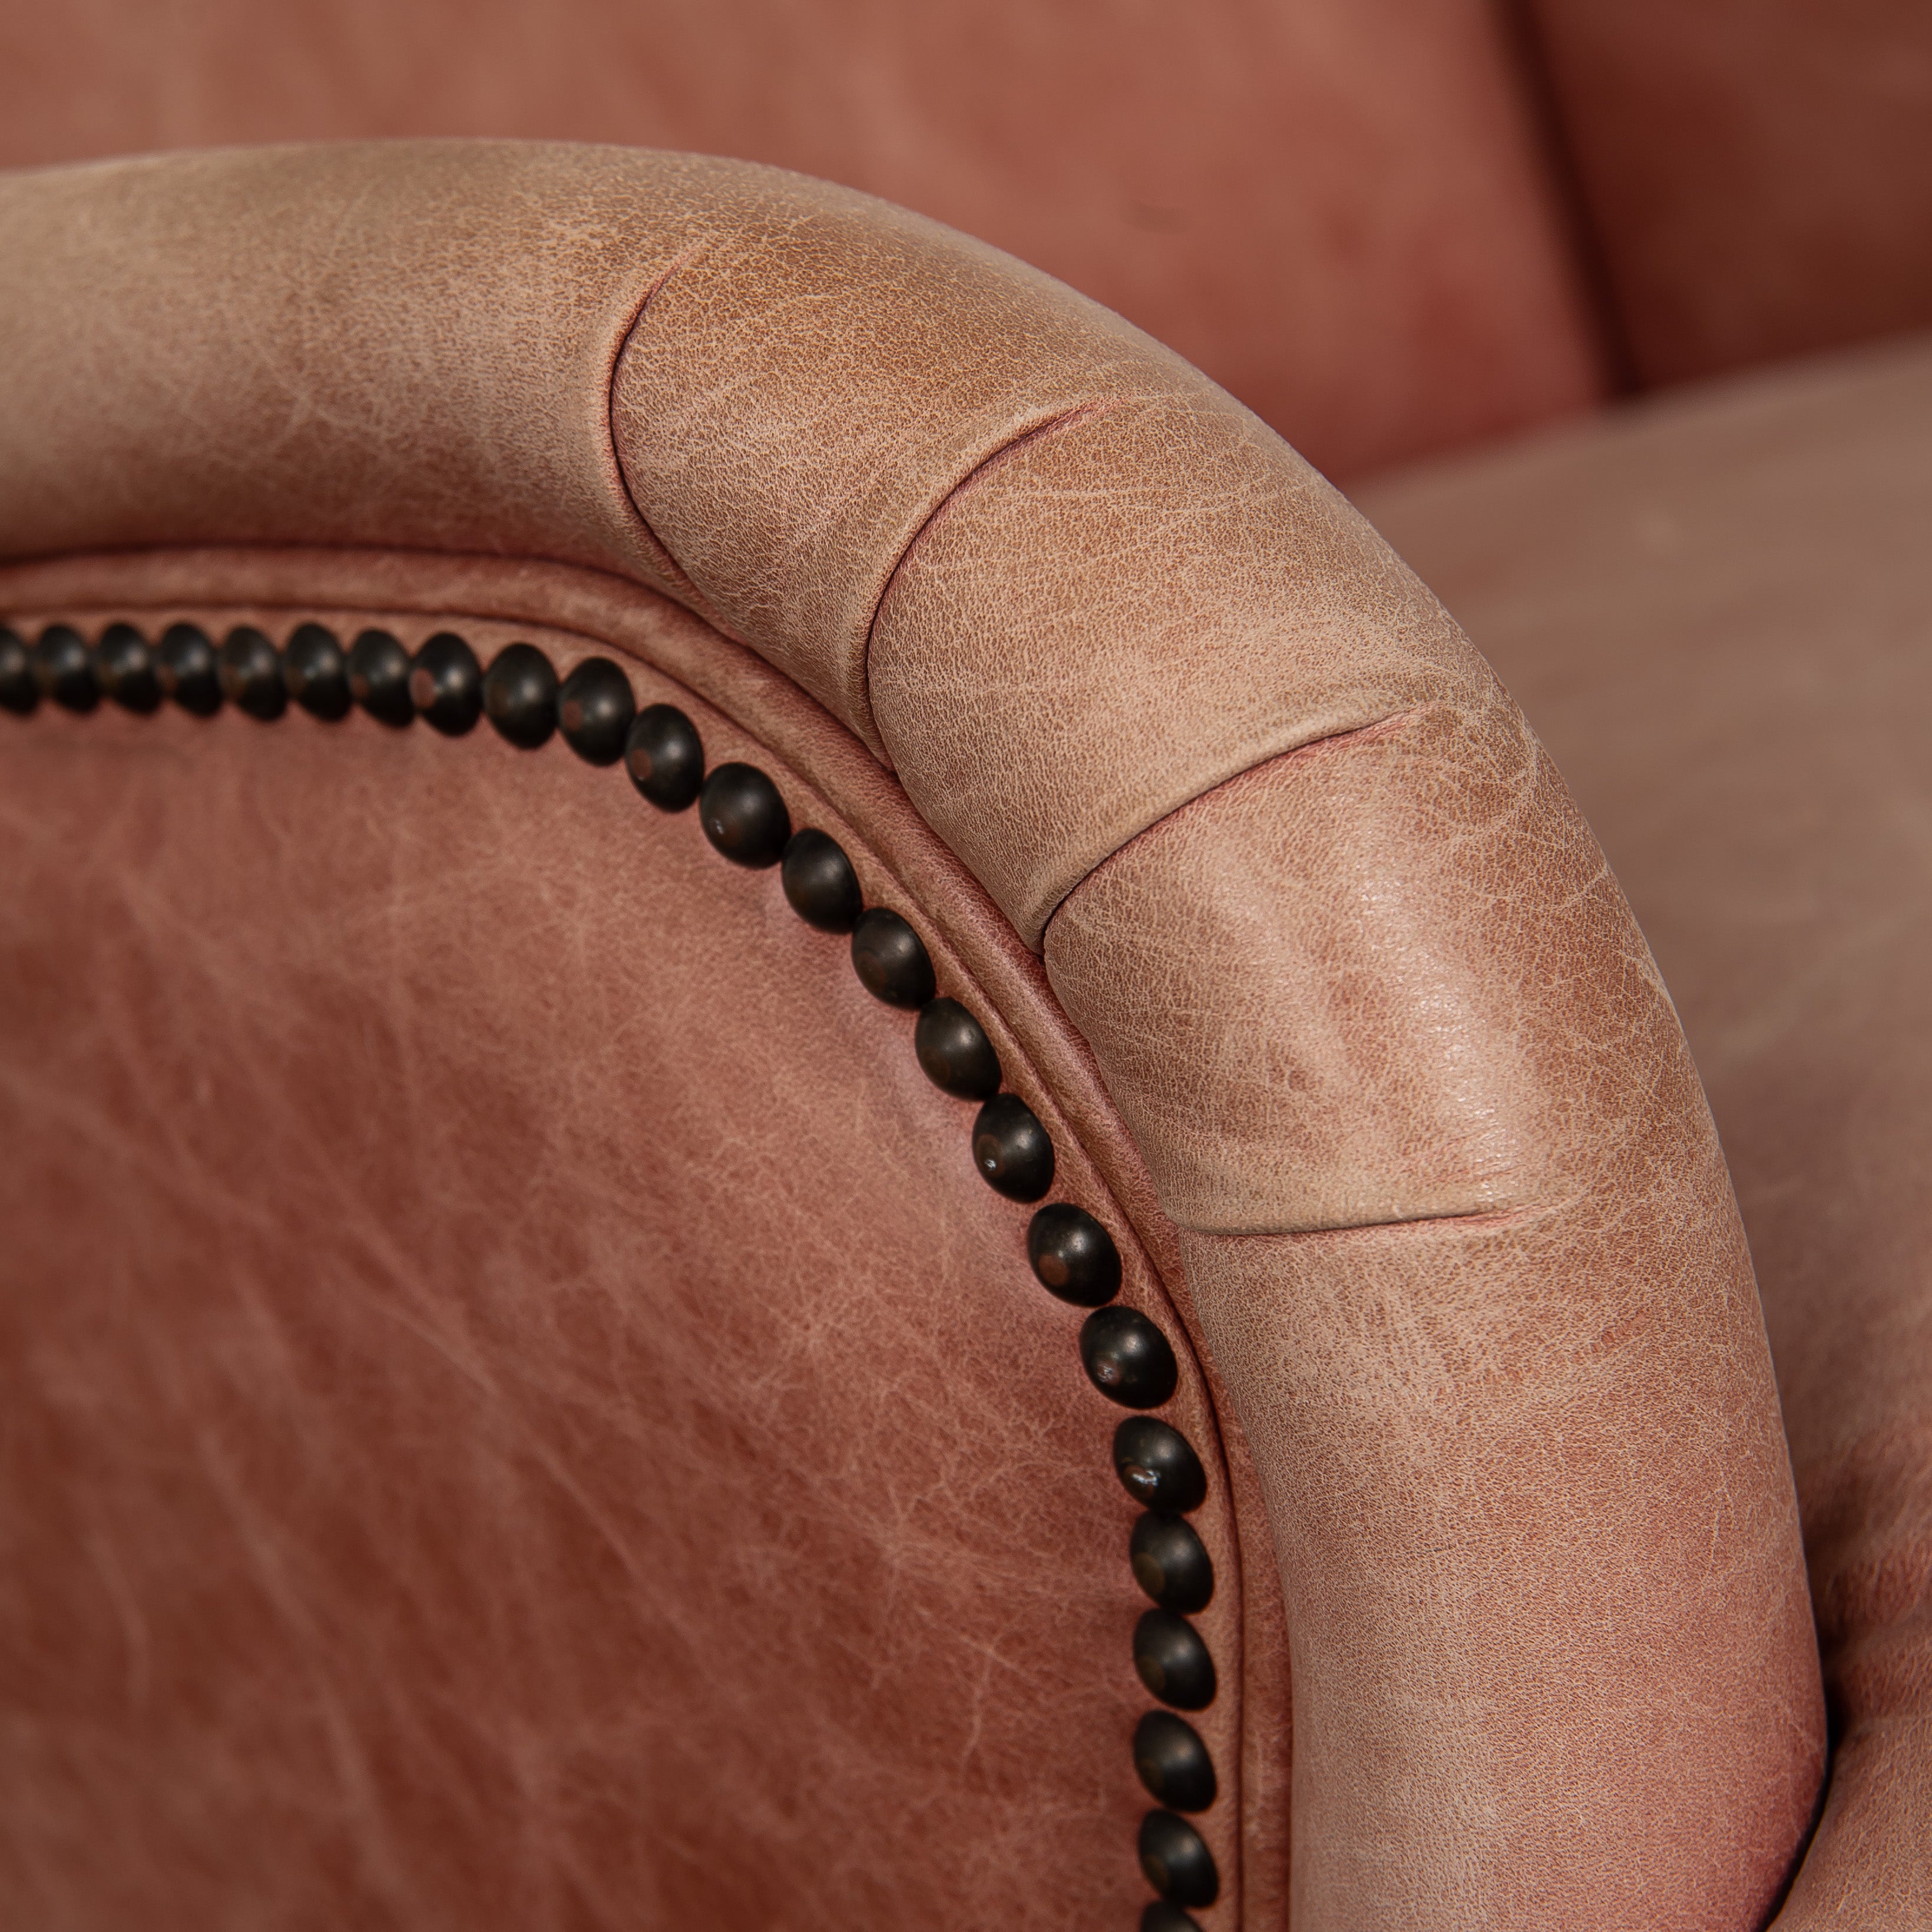 Contessa Leather Chair